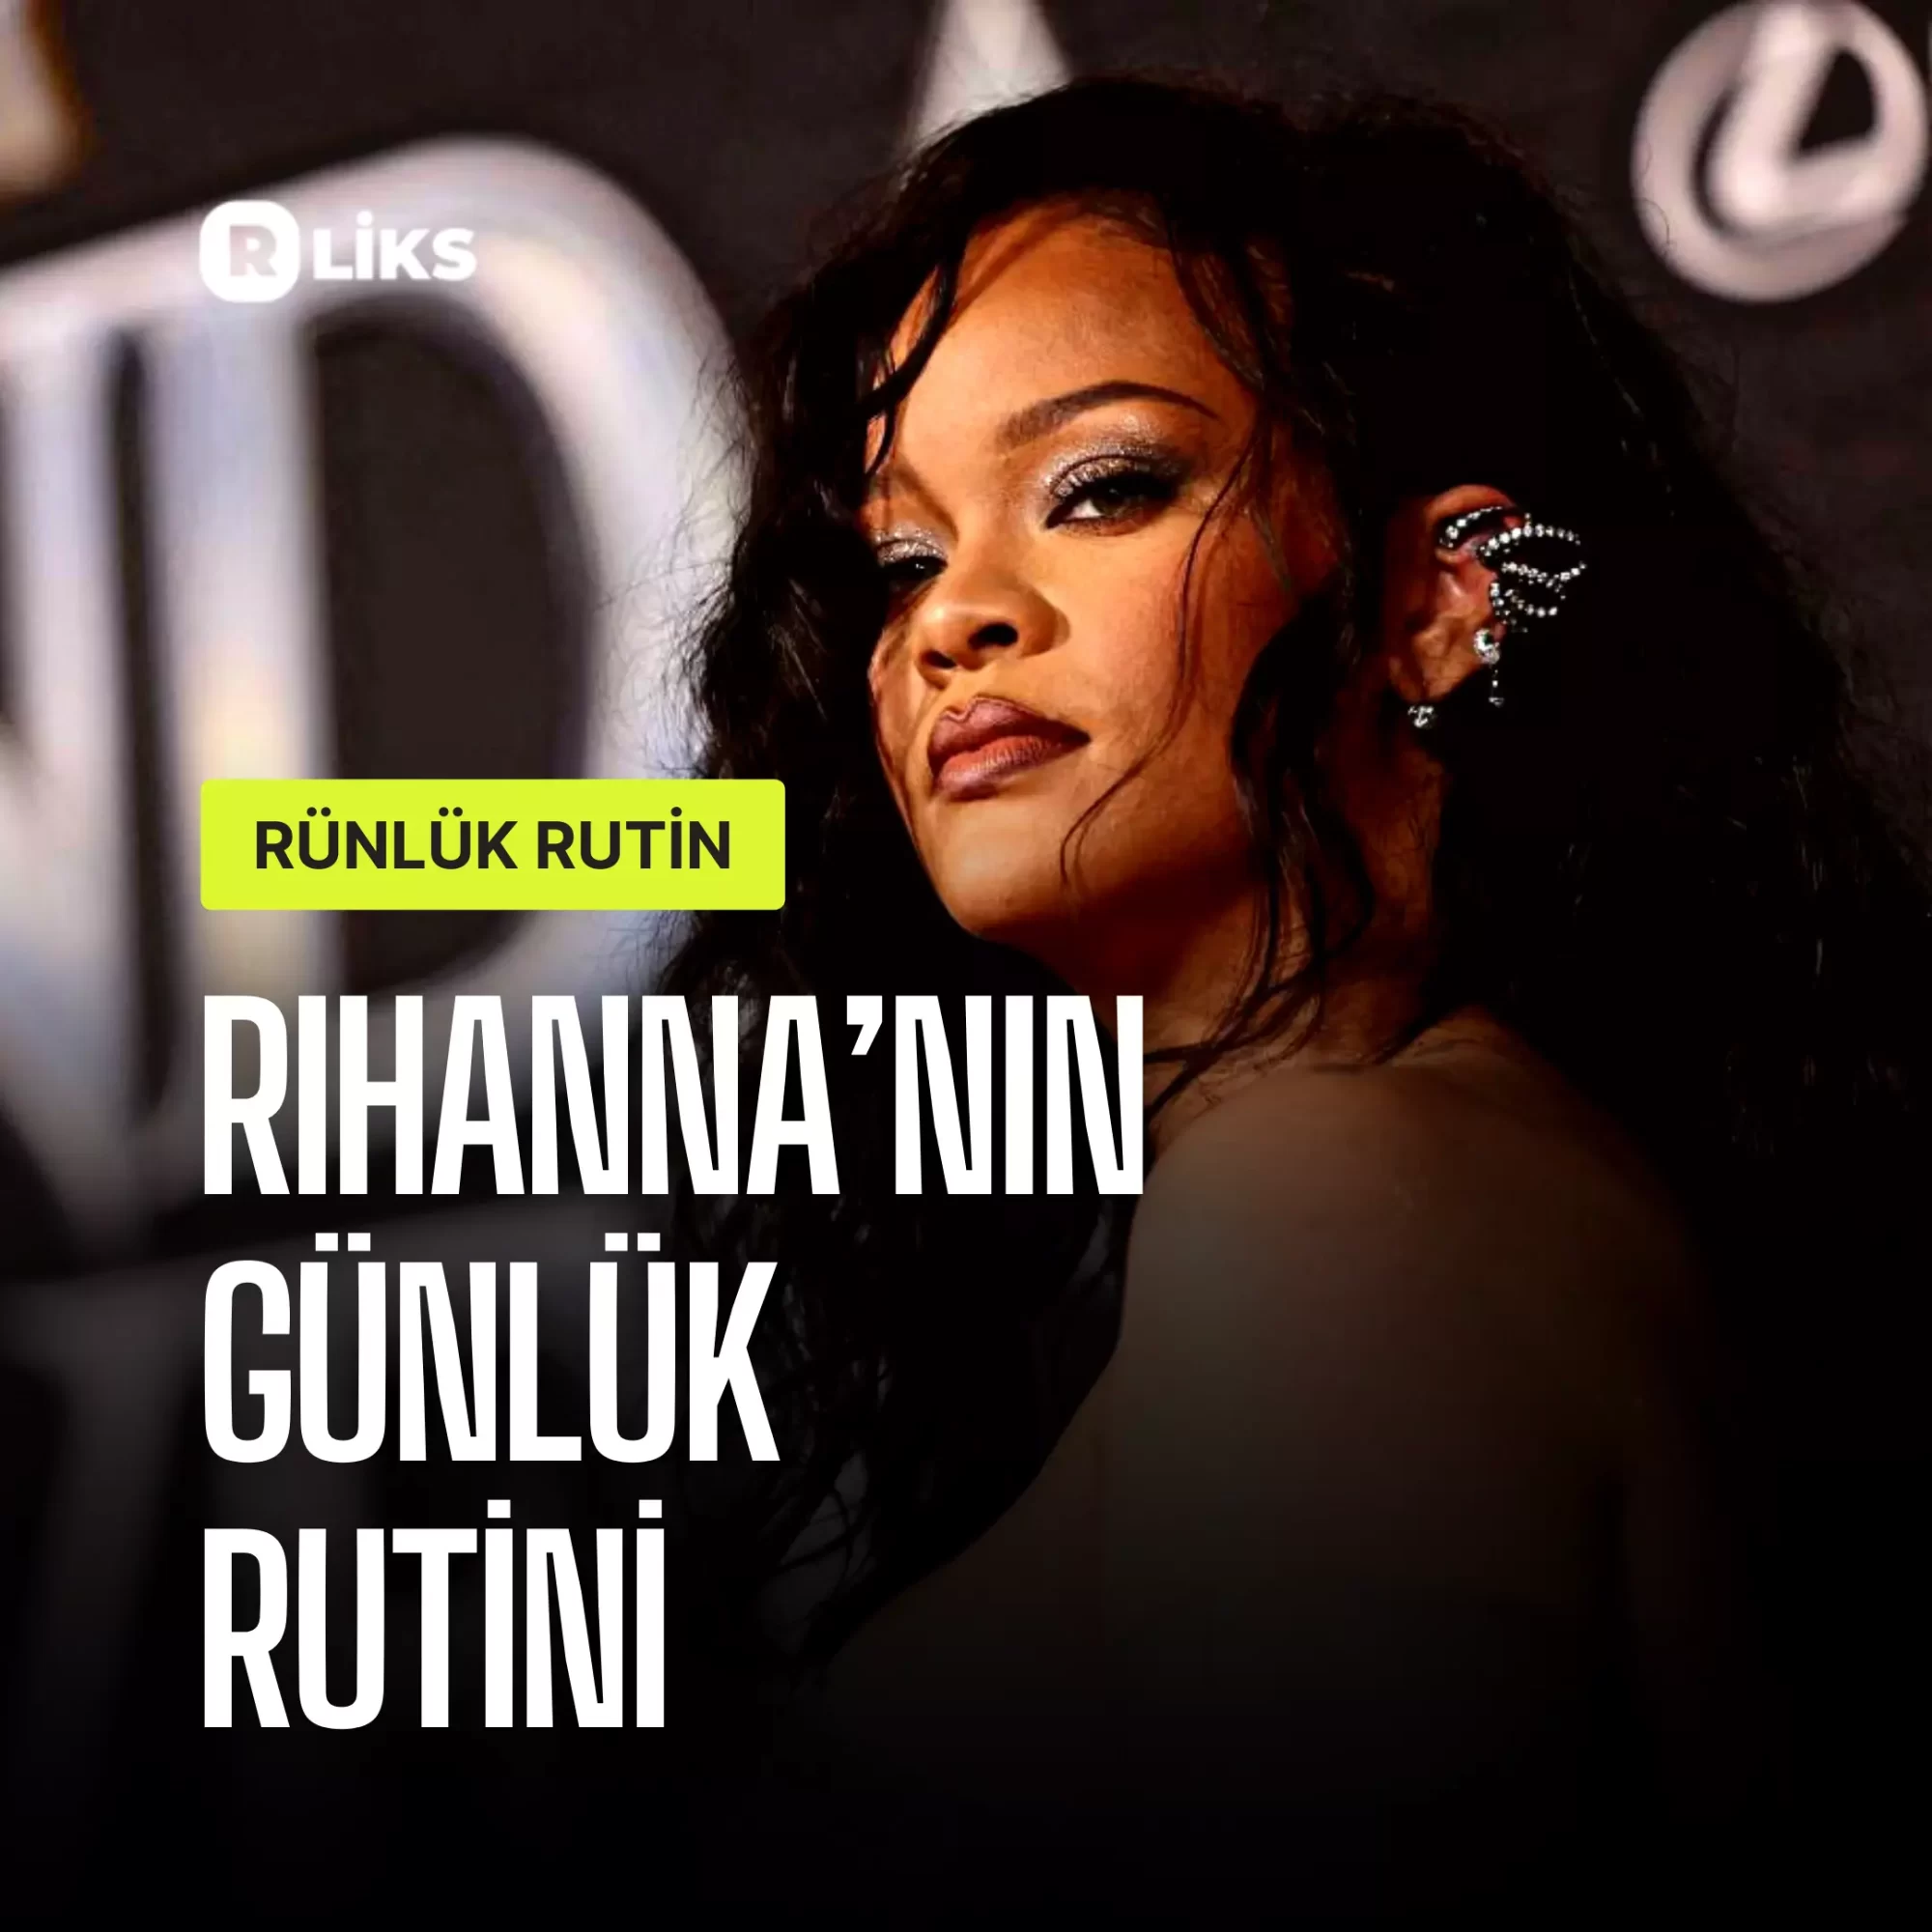 Rihanna'nın günlük rutini